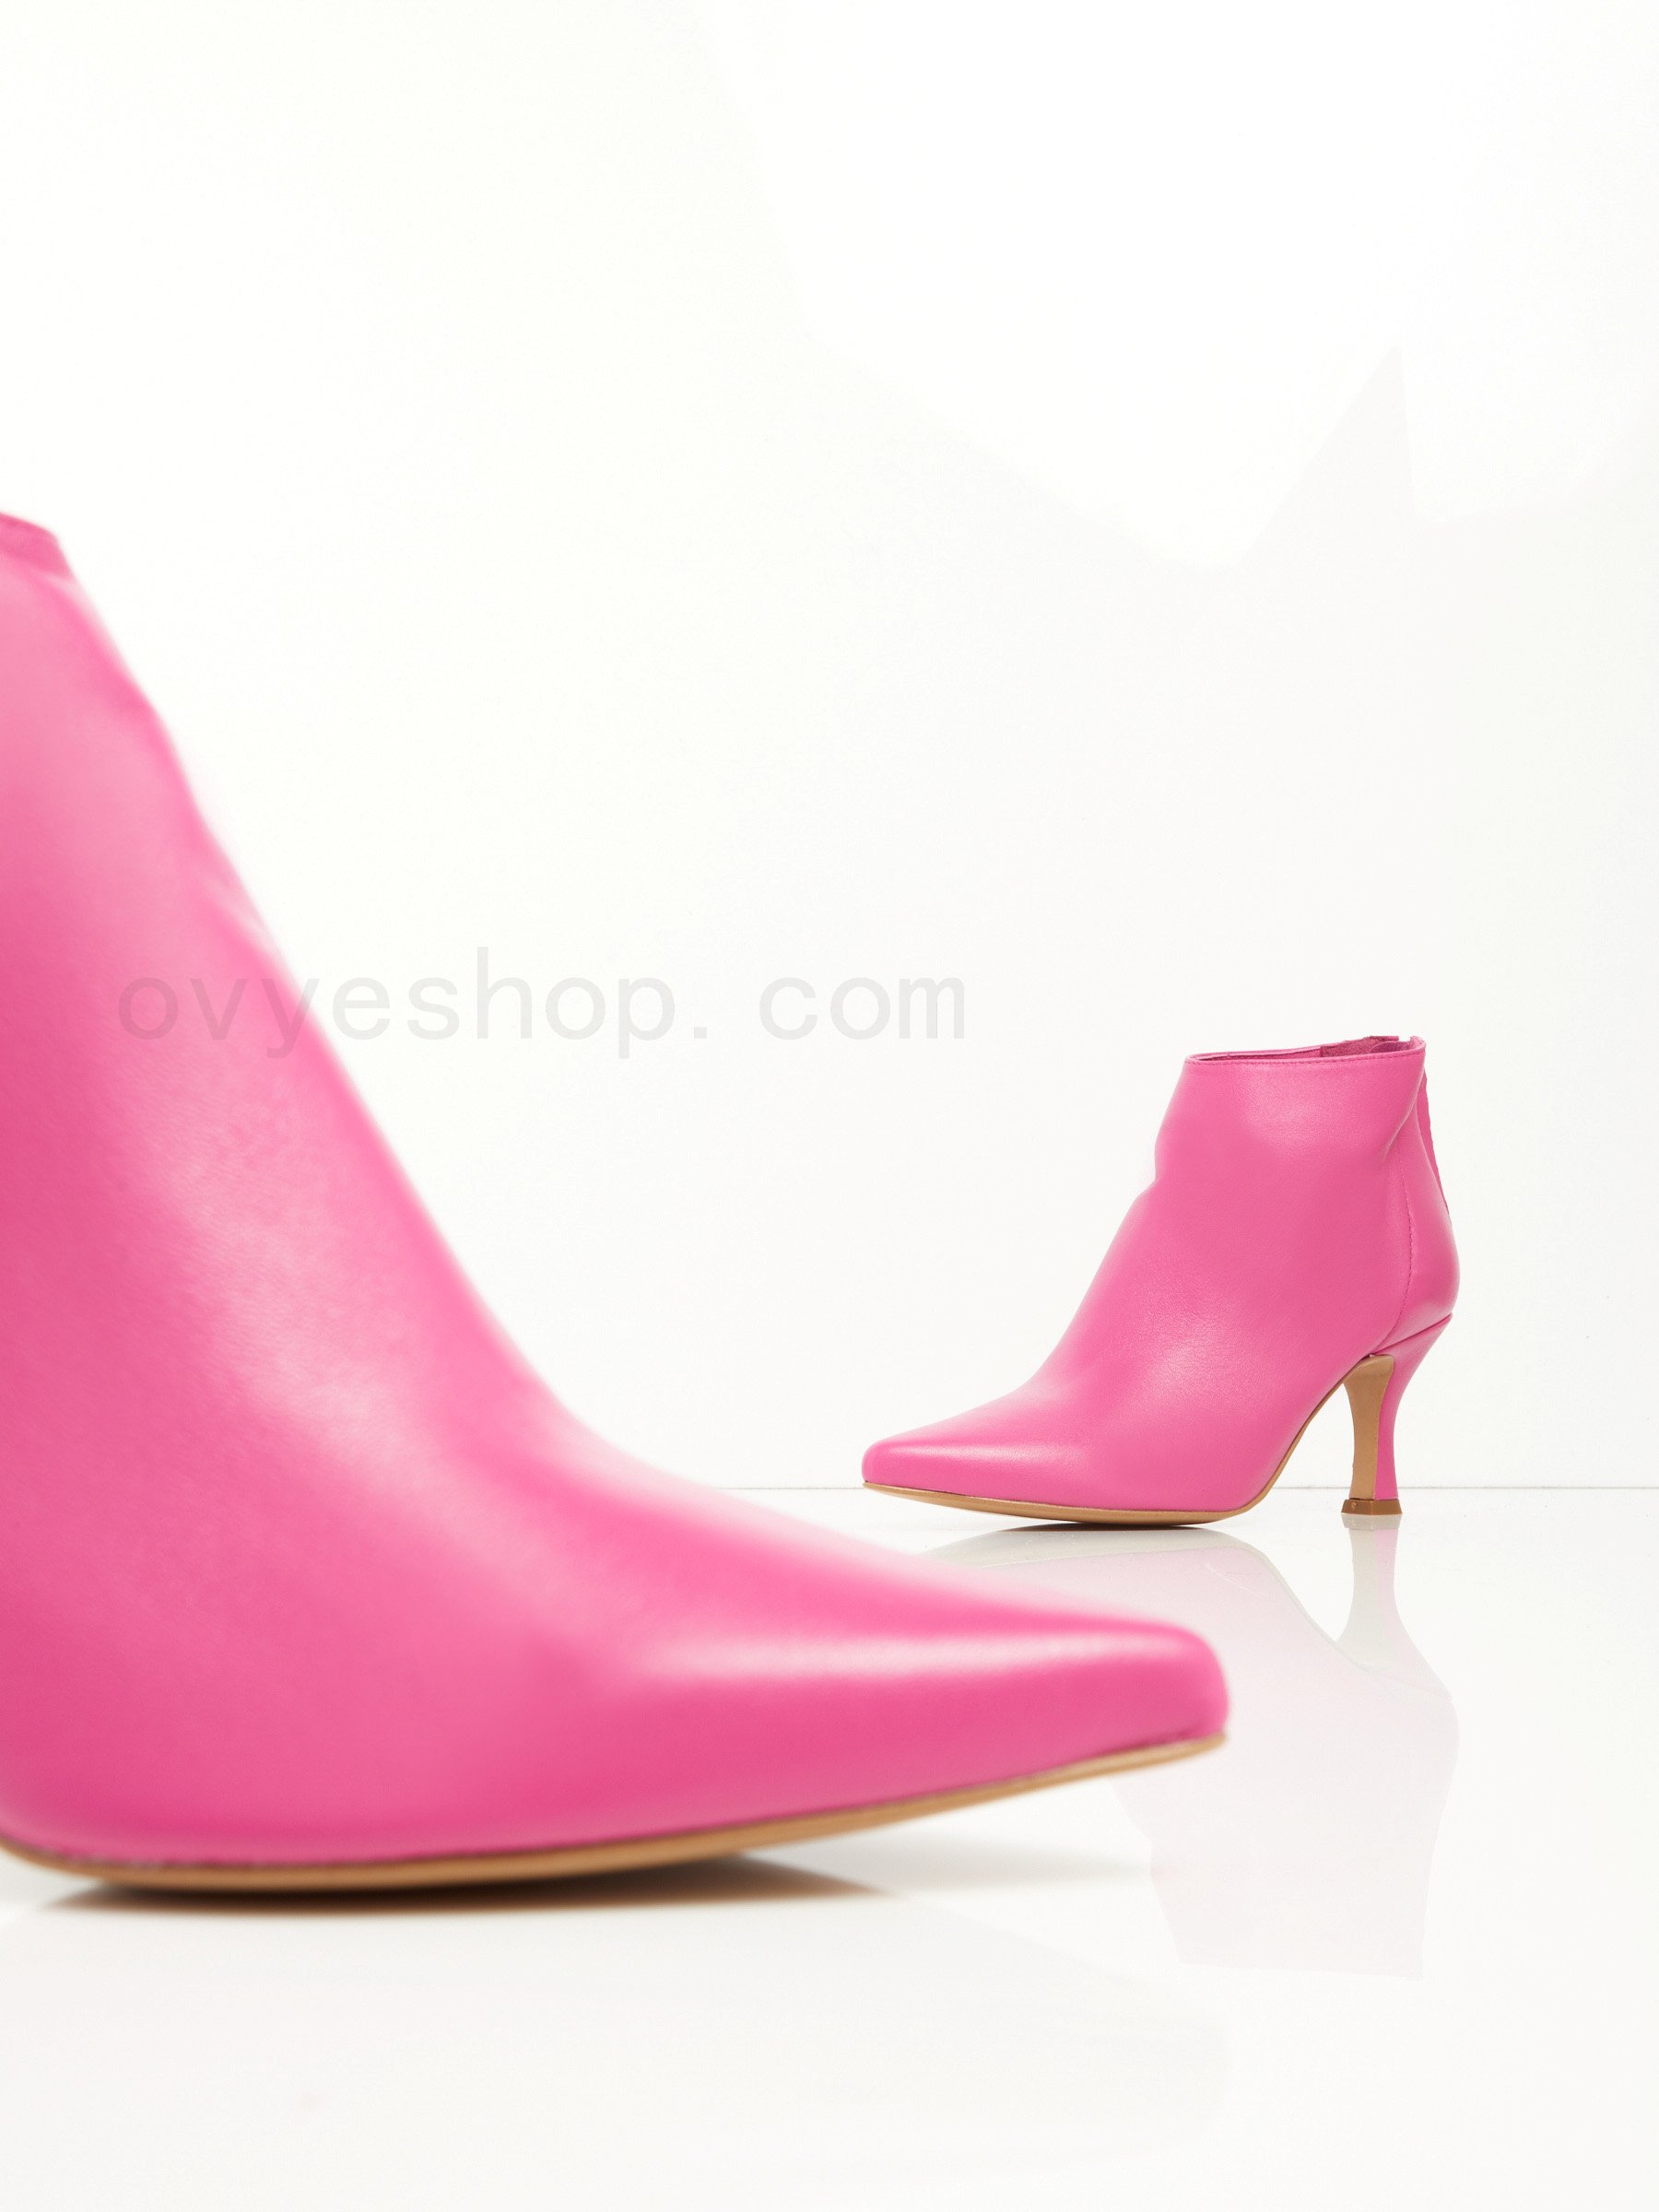 Leather Ankle Boots F0817885-0416 moda scarpe